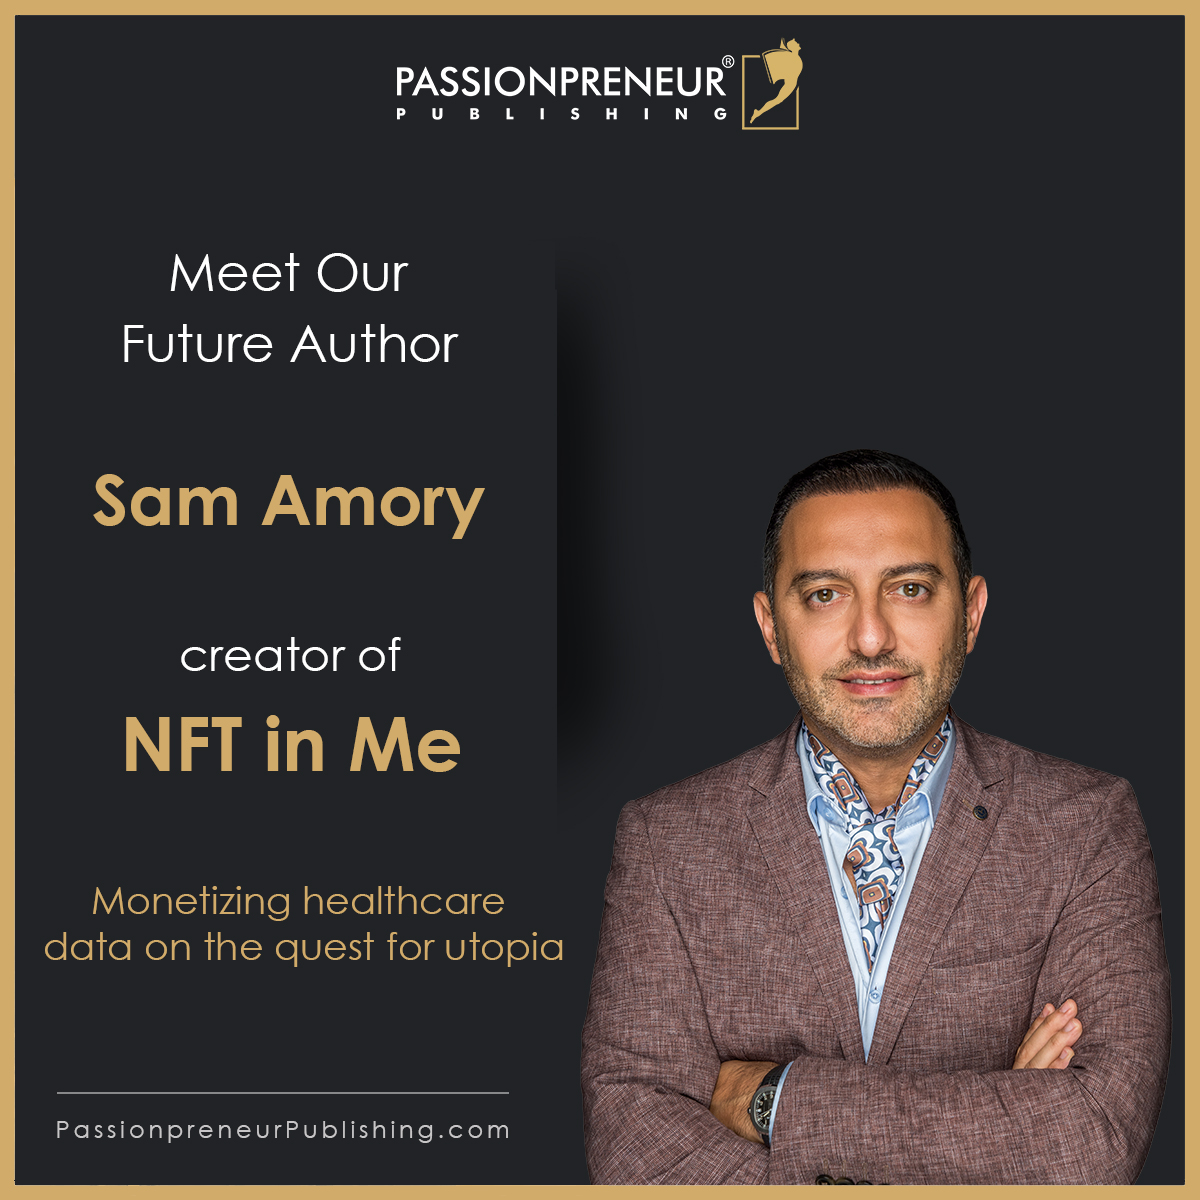 Meet Our Future Author Sam Amory